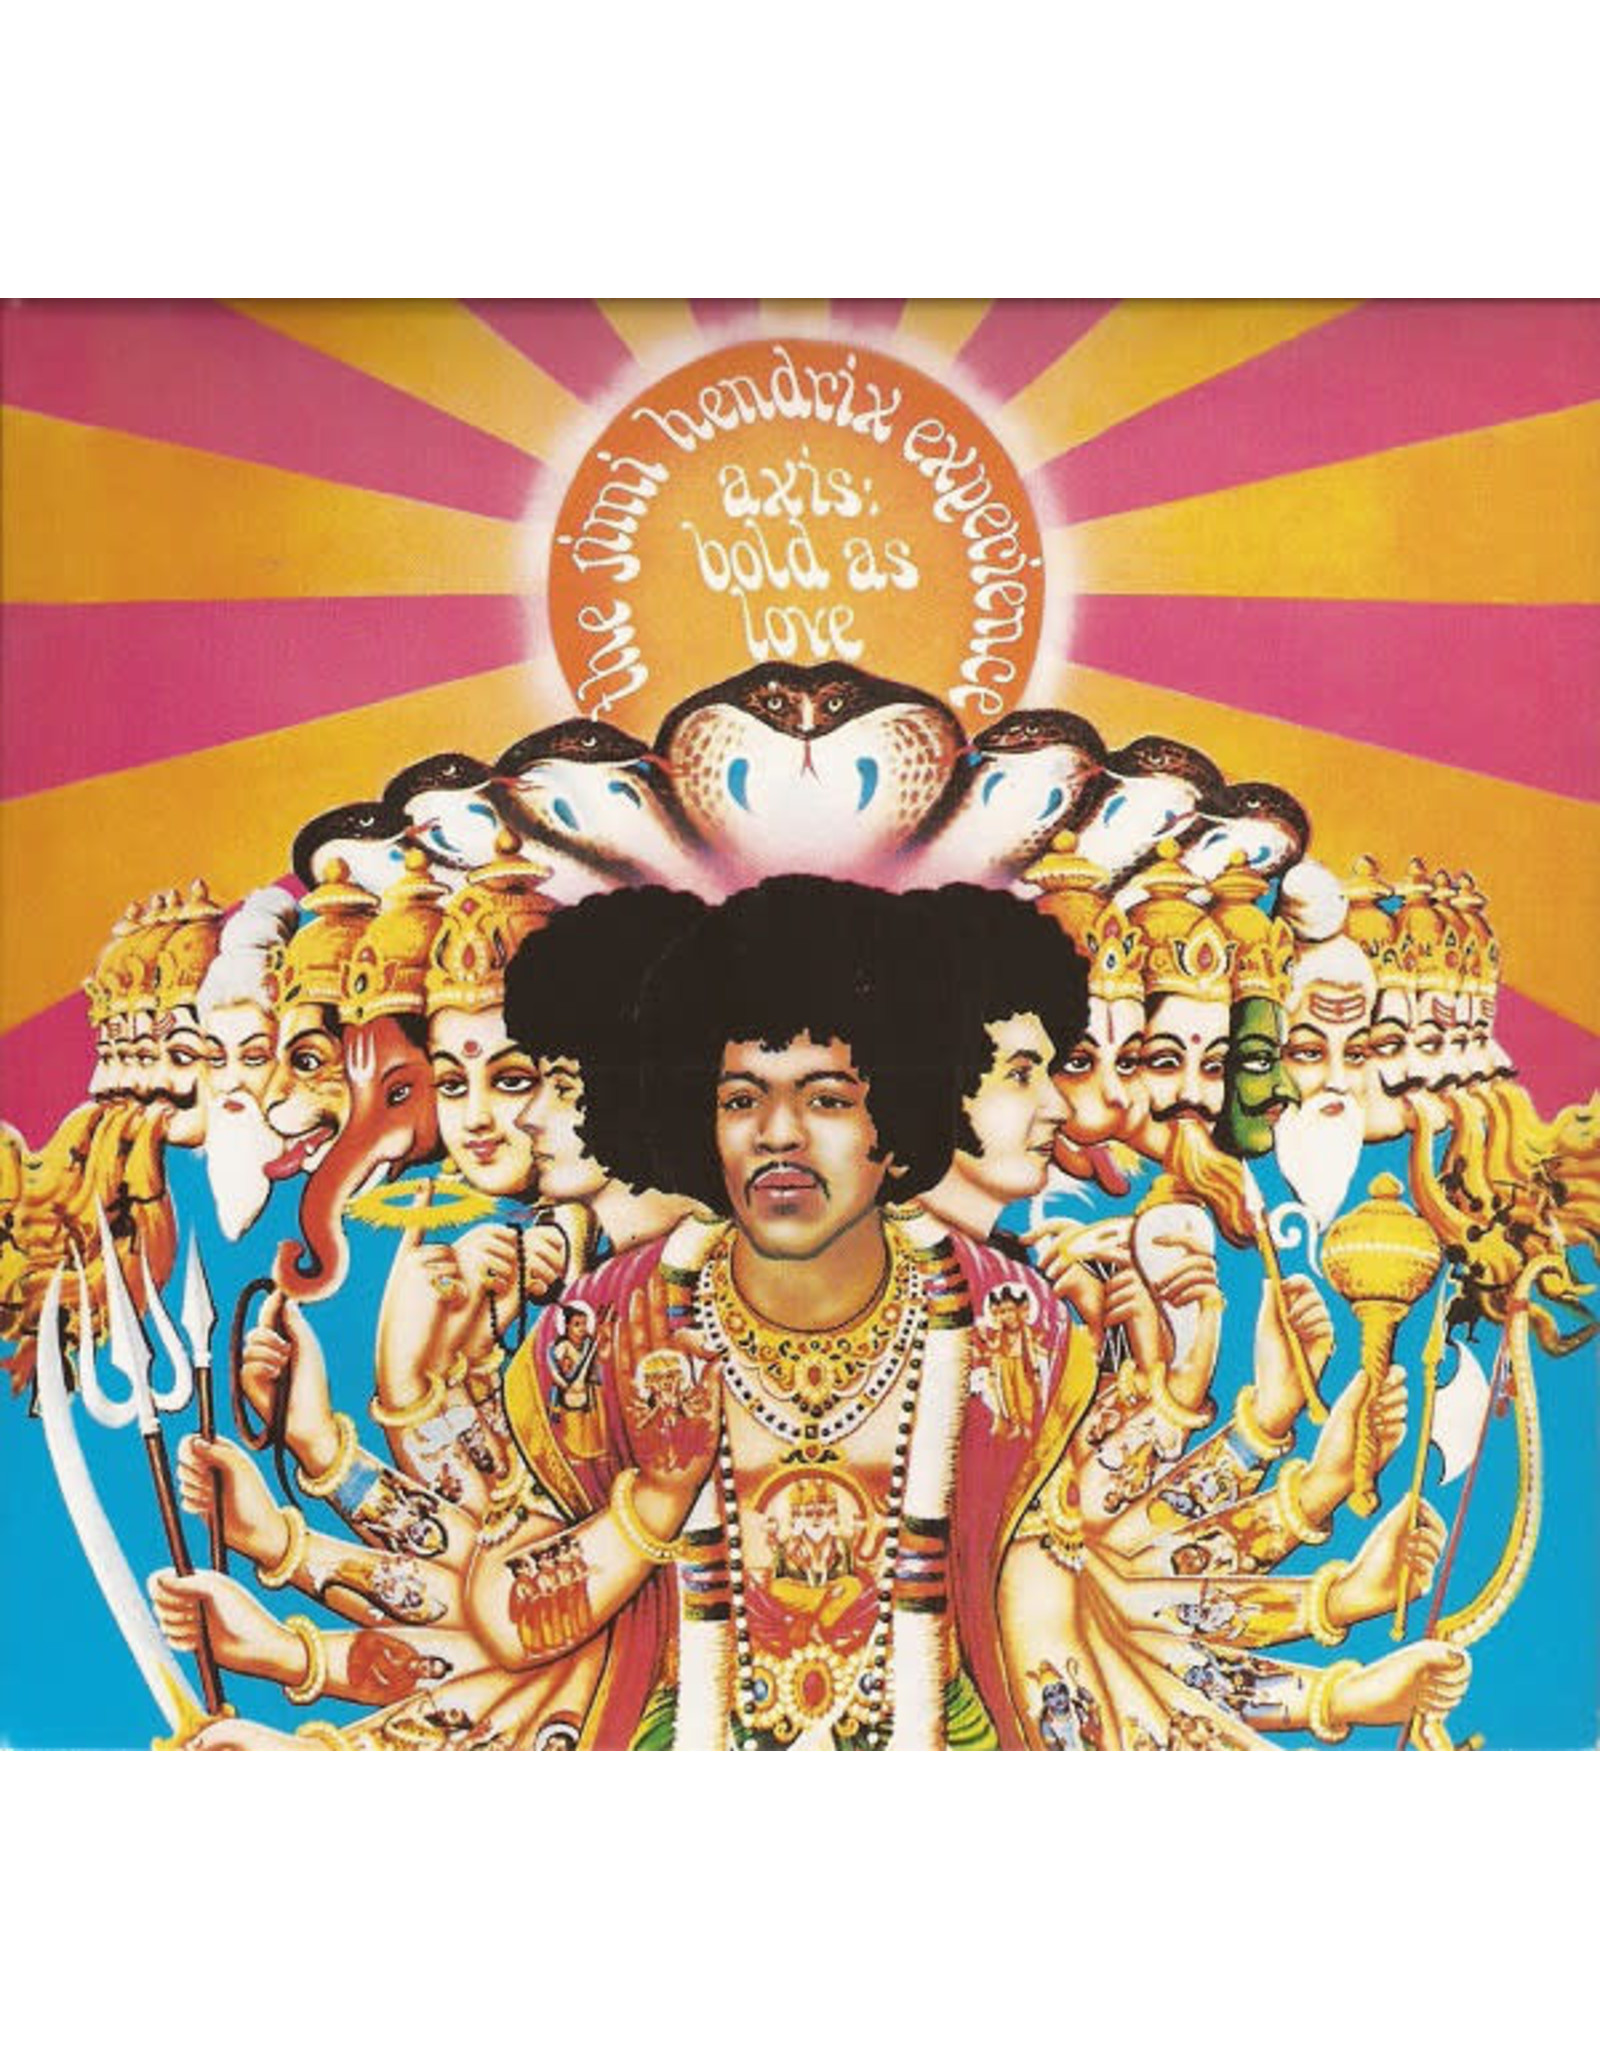 Hendrix, Jimi - Axis: Bold As Love (Dlx.) CD